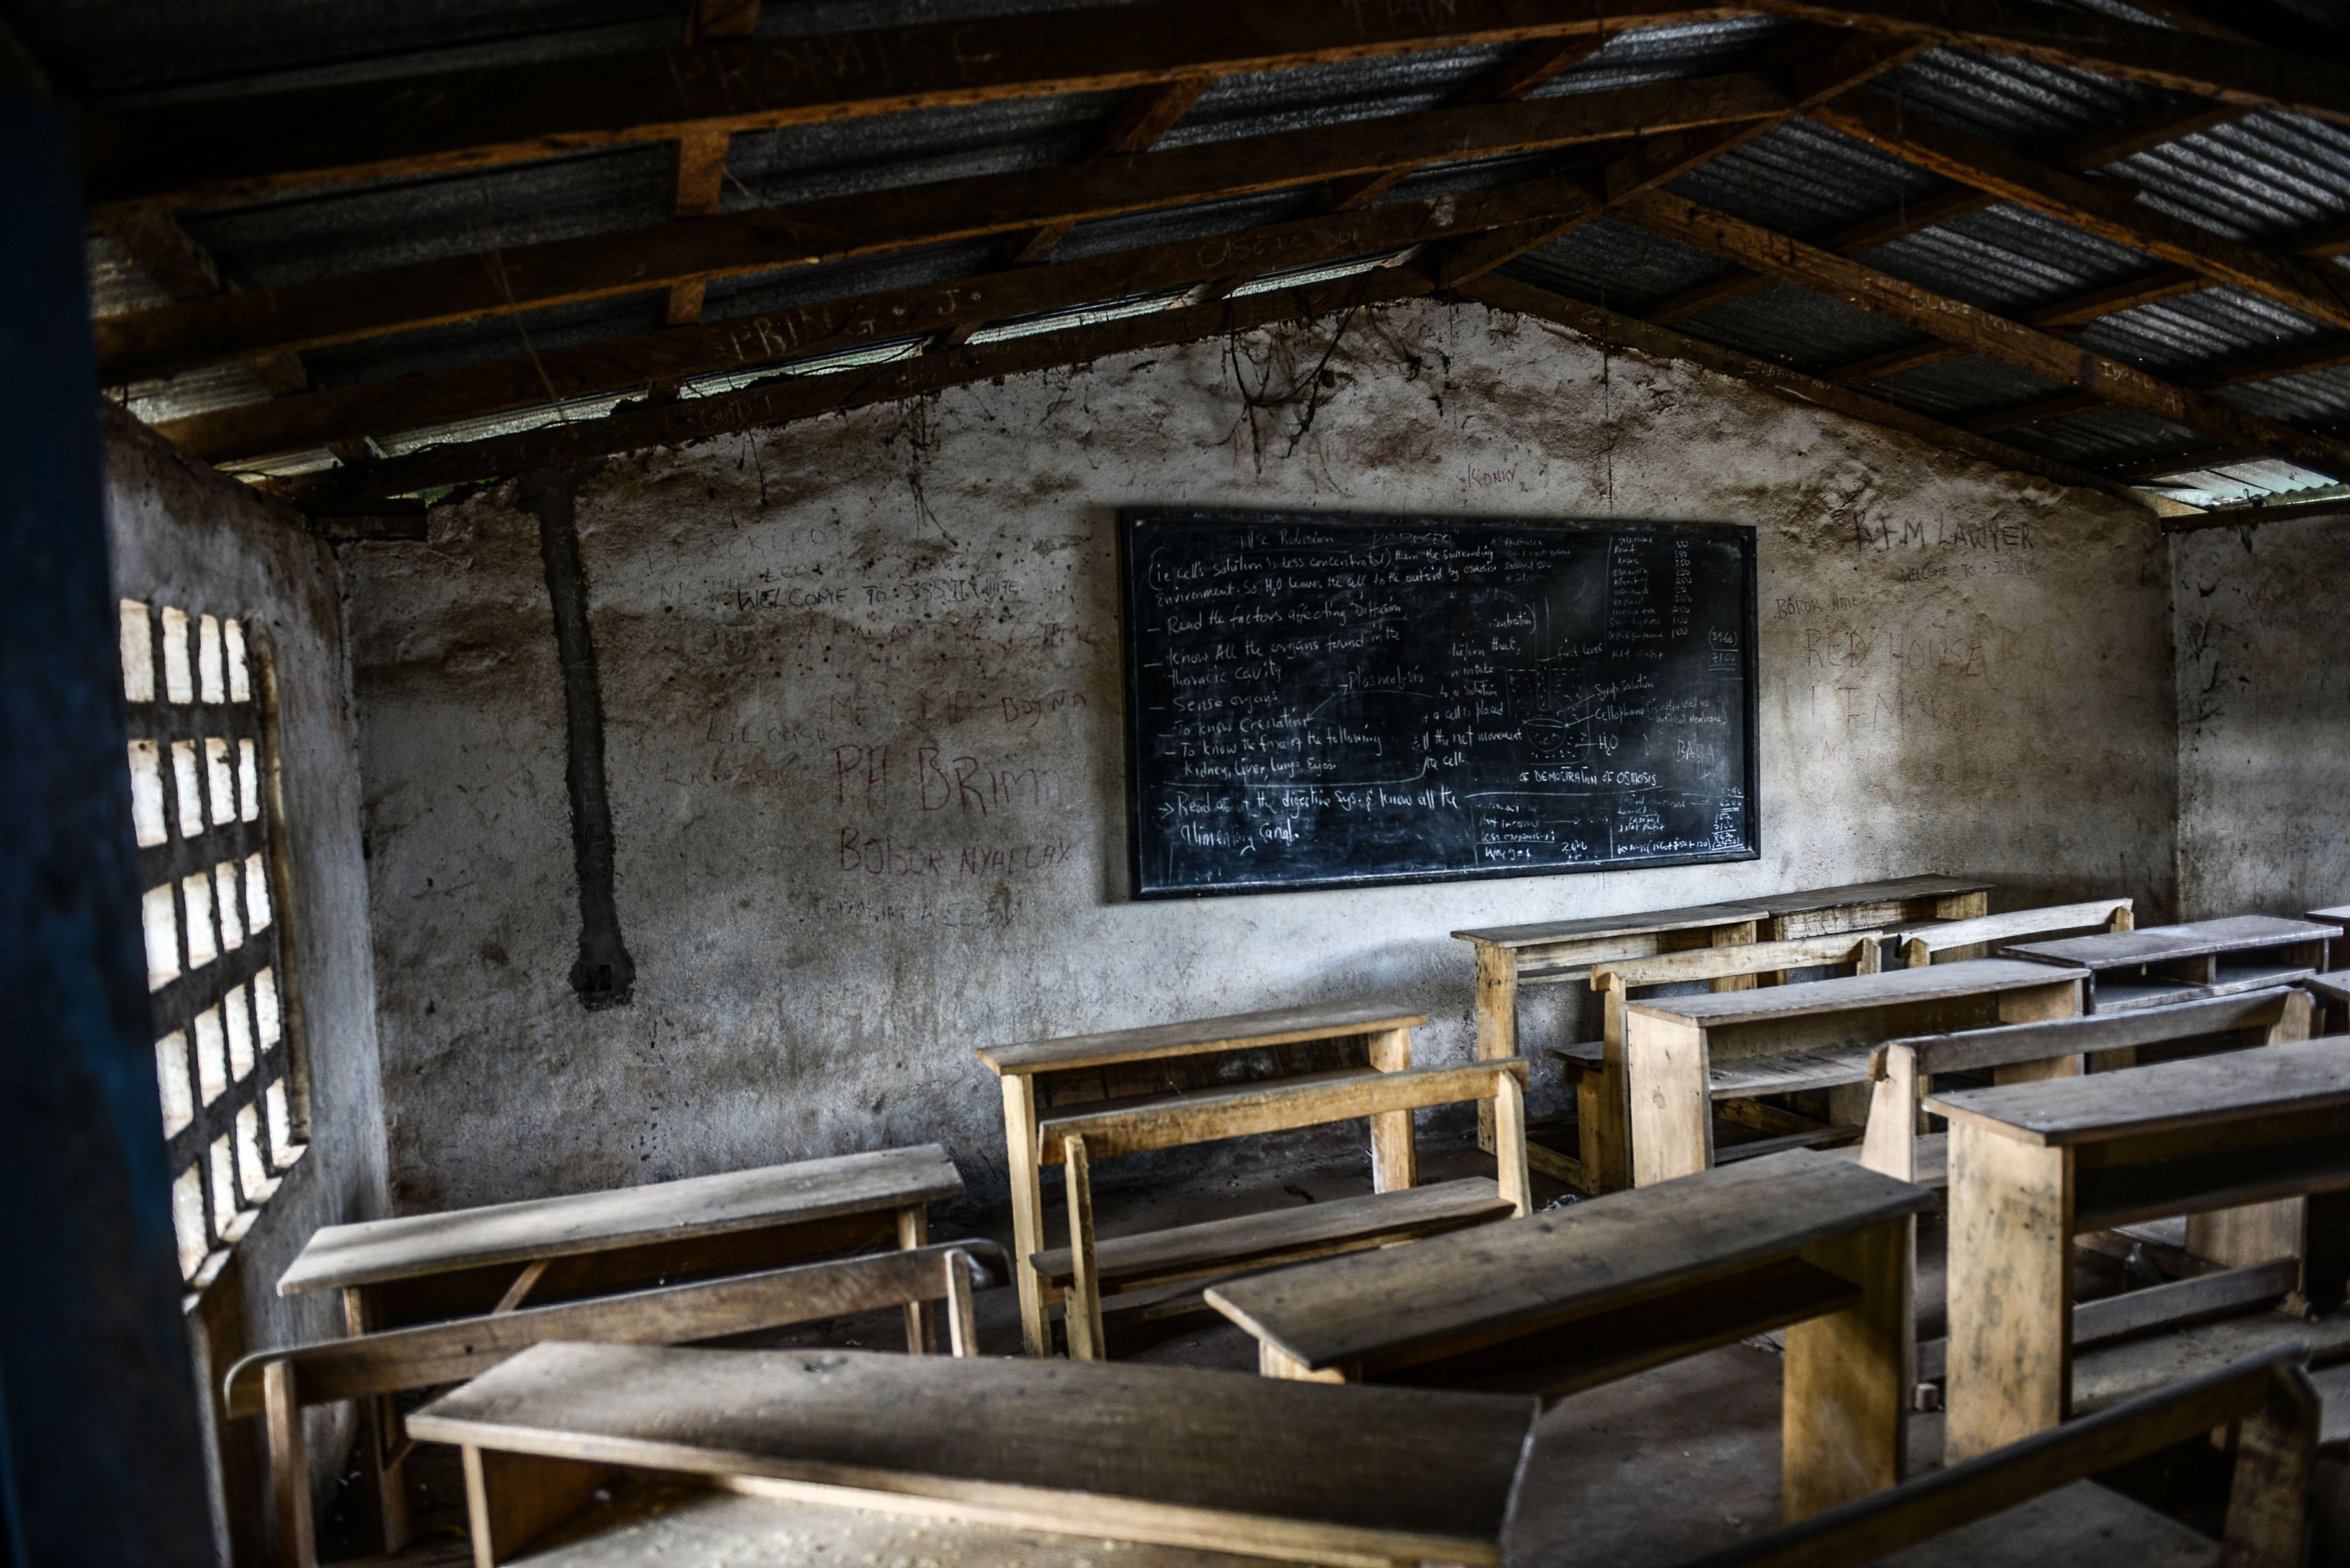 Schools closed in Sierra Leone after Ebola outbreak